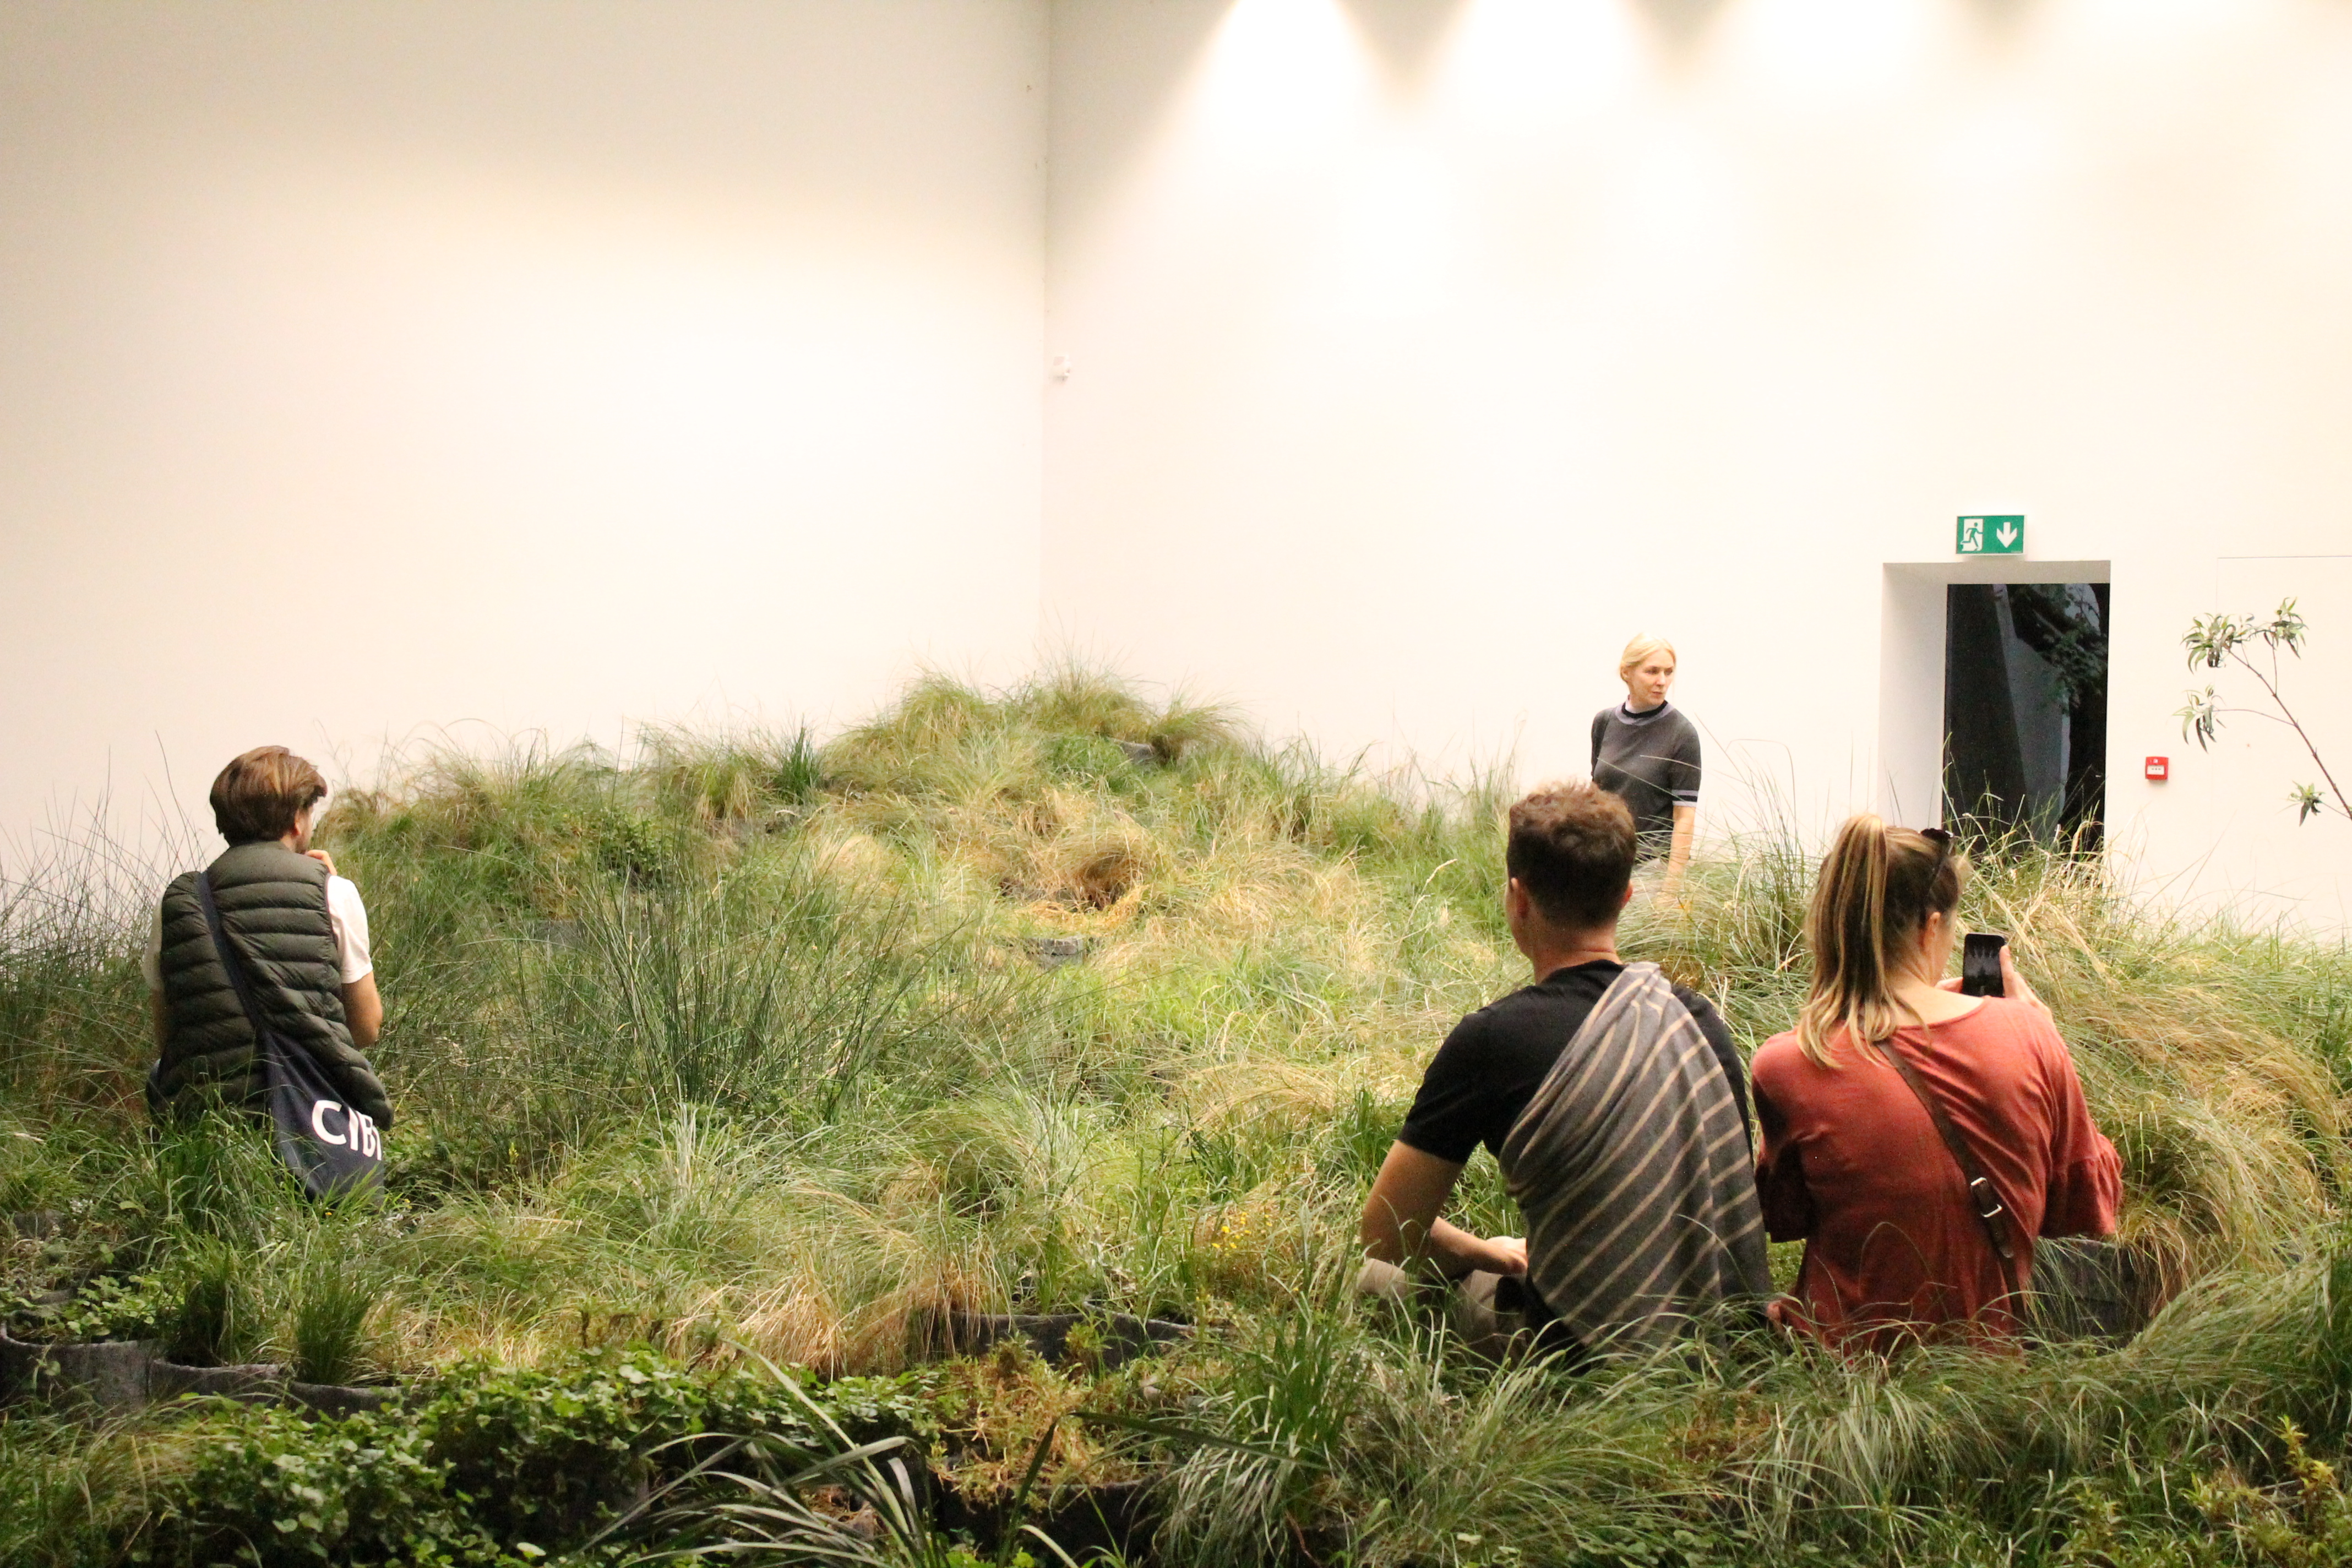 Linda Tegg, Grasslands repair, 2018, Biennale di Venezia, Padiglione Australia, Giardini